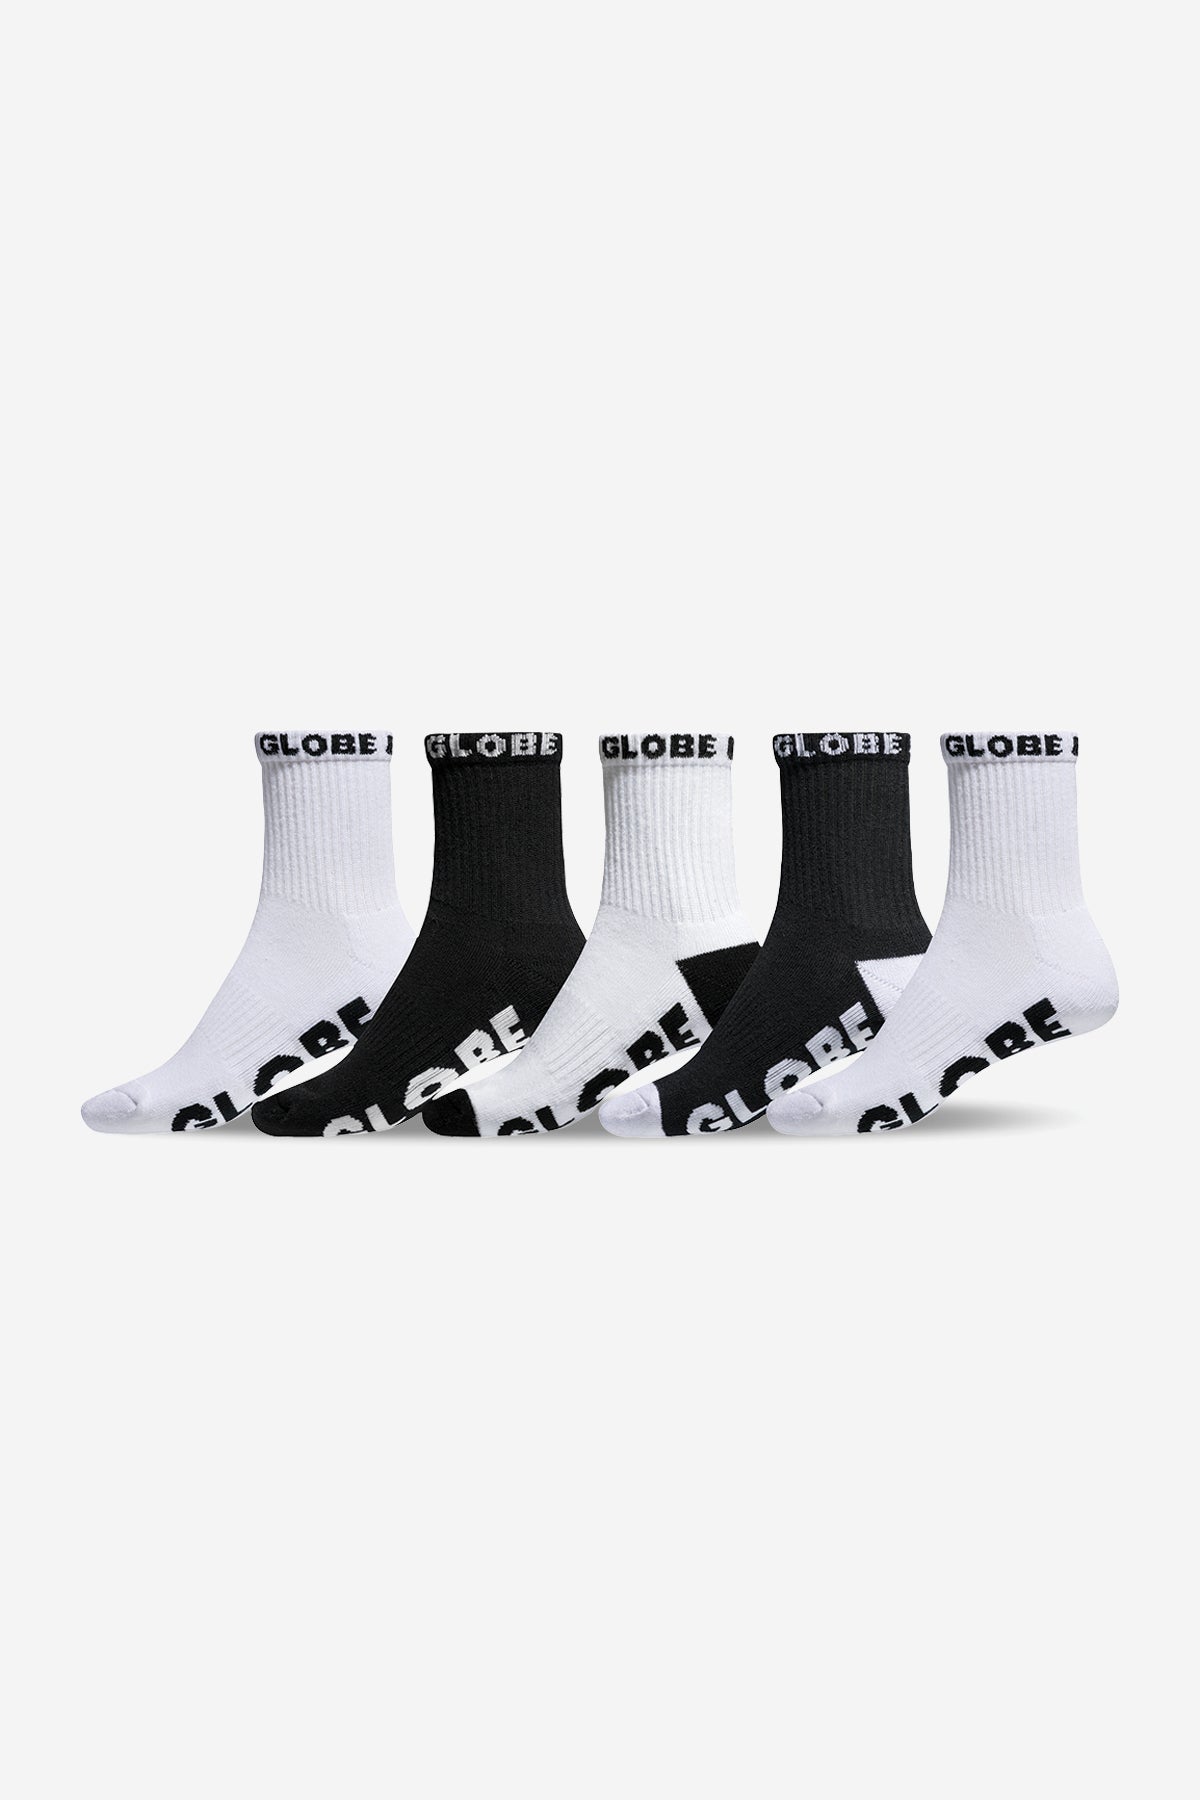 Large Quarter Sock 5 Pack (12-15) - Globe Brand AU